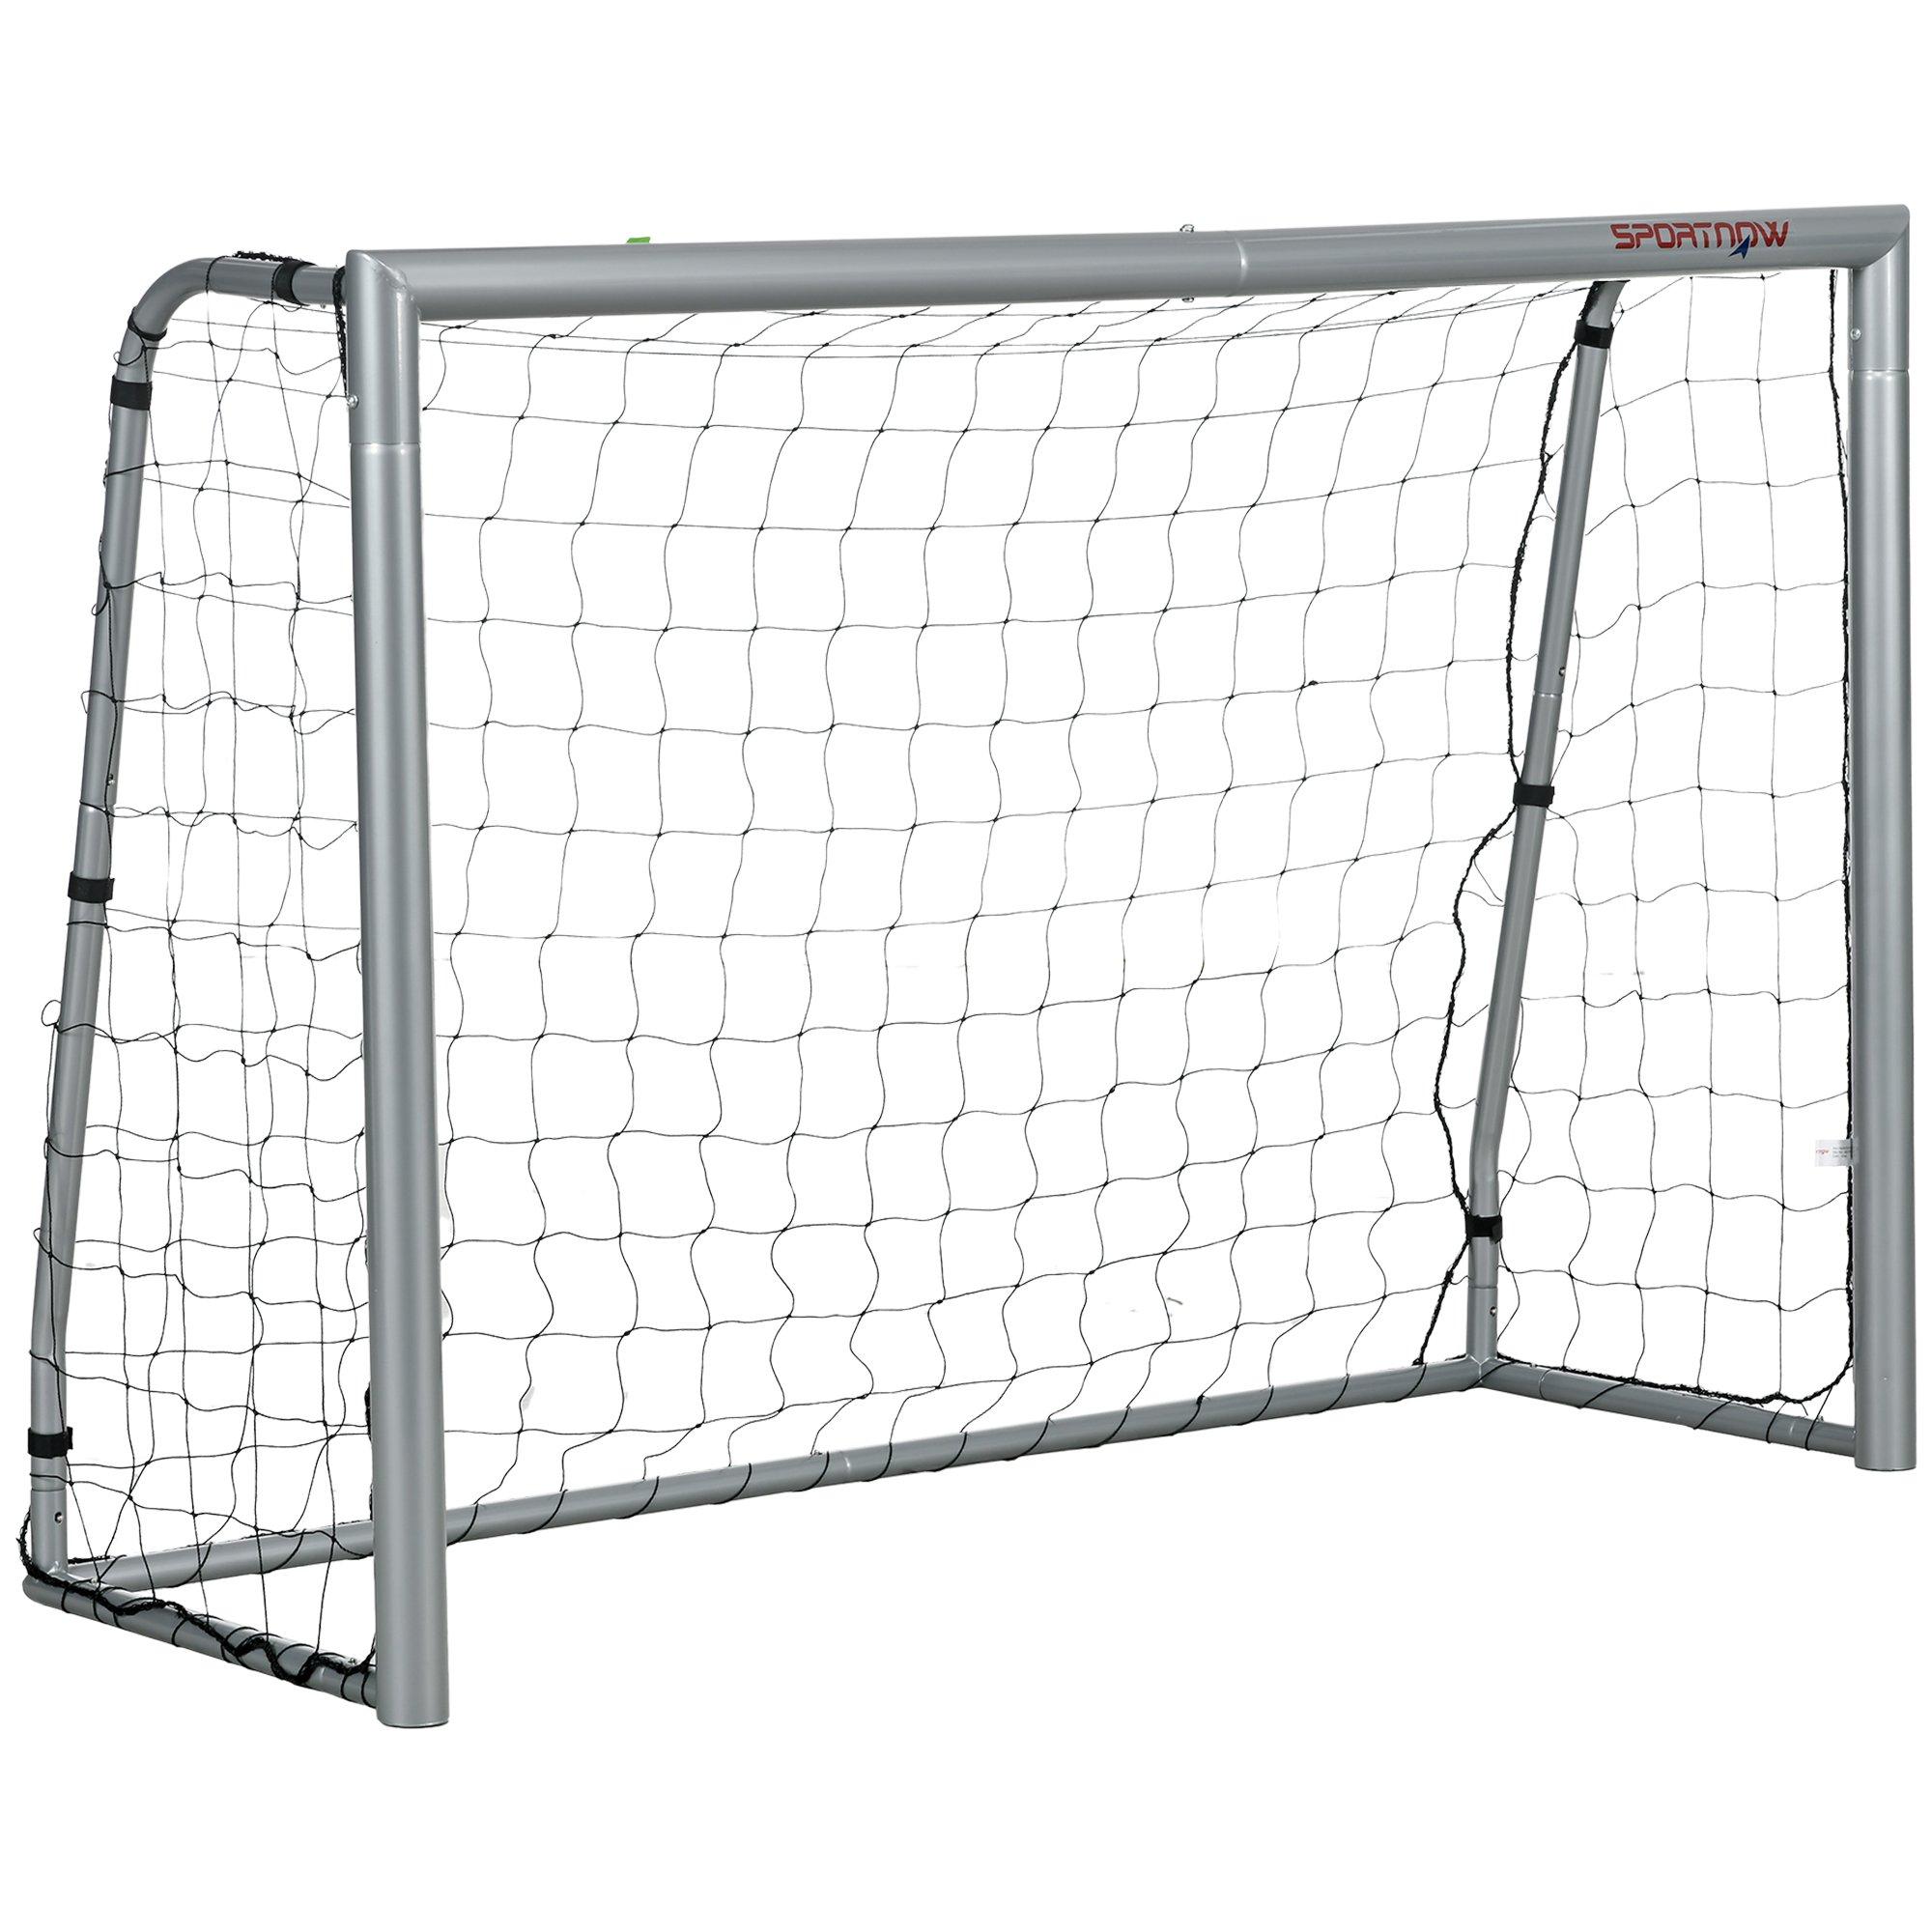 6ft x 2ft Football Goal, Simple Set Up Football Training Net